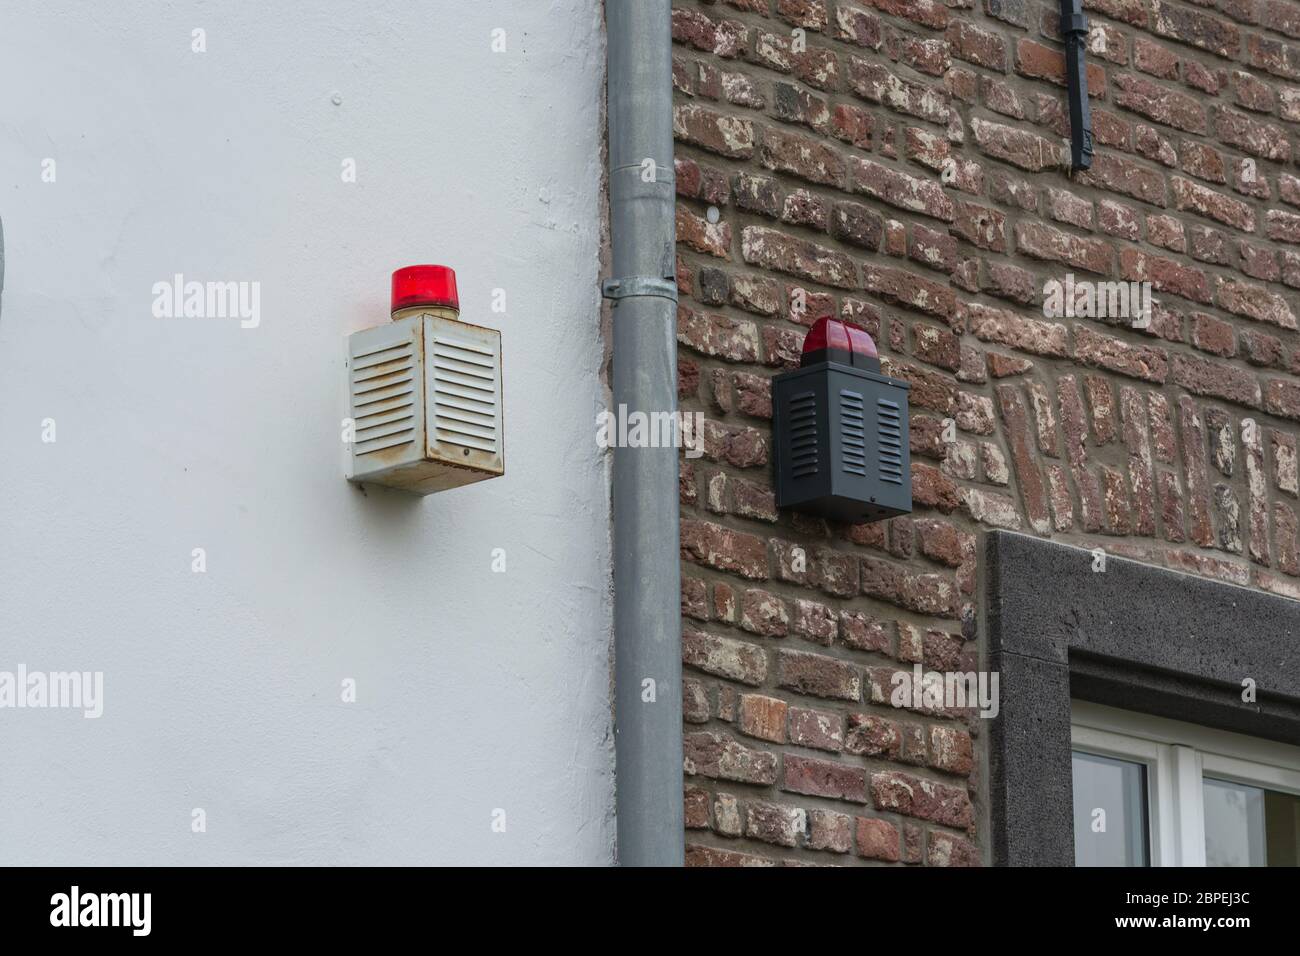 Alarm Lampe in Nordrhein-Westfalen